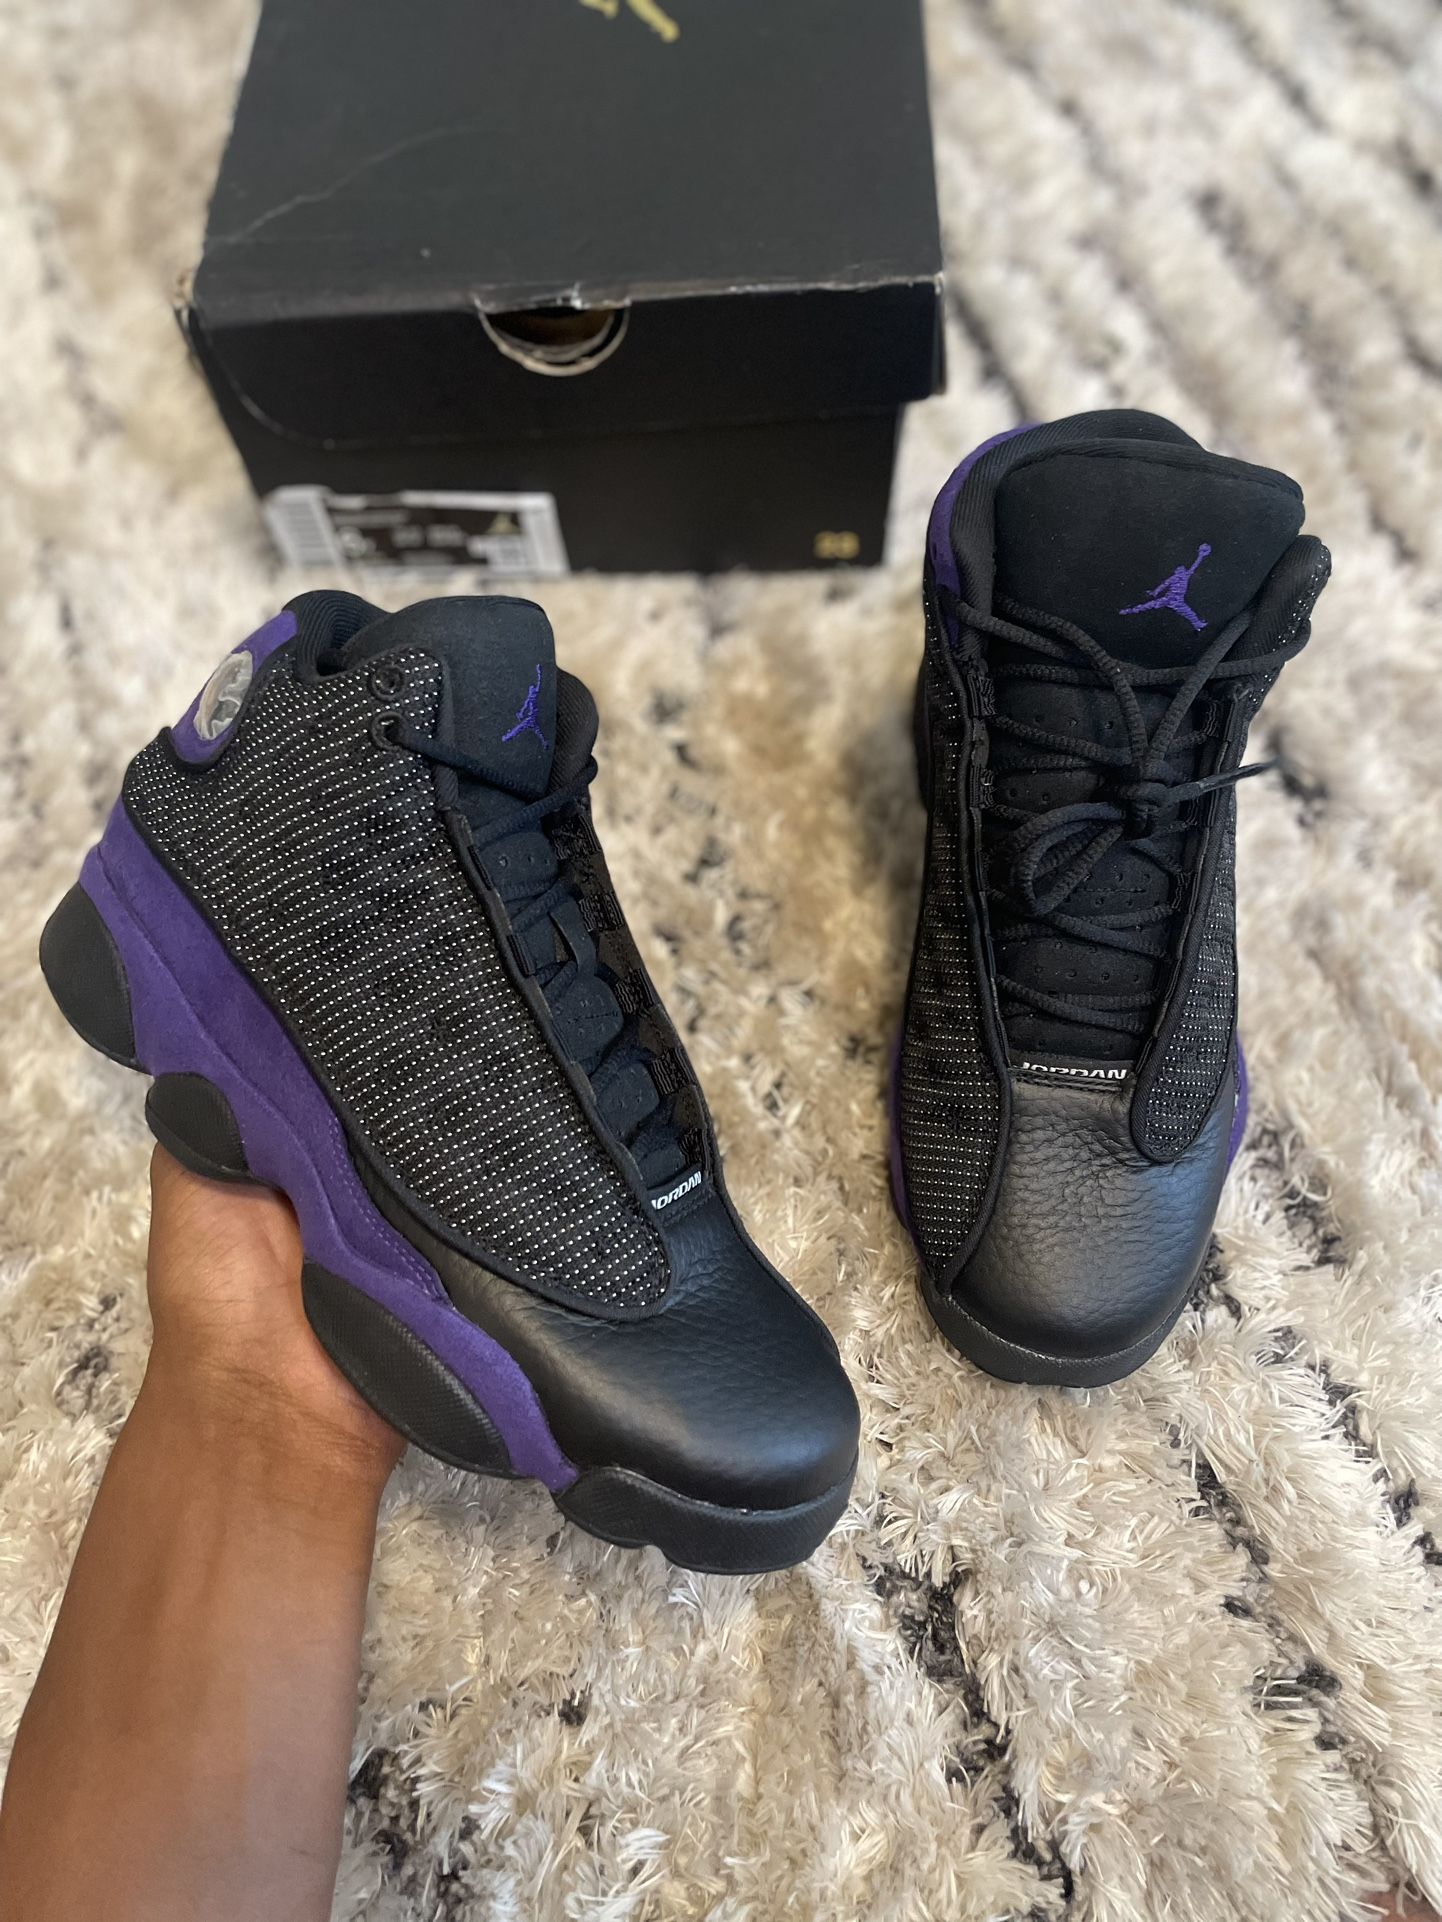 Jordan 13 Court Purple Size 6Y